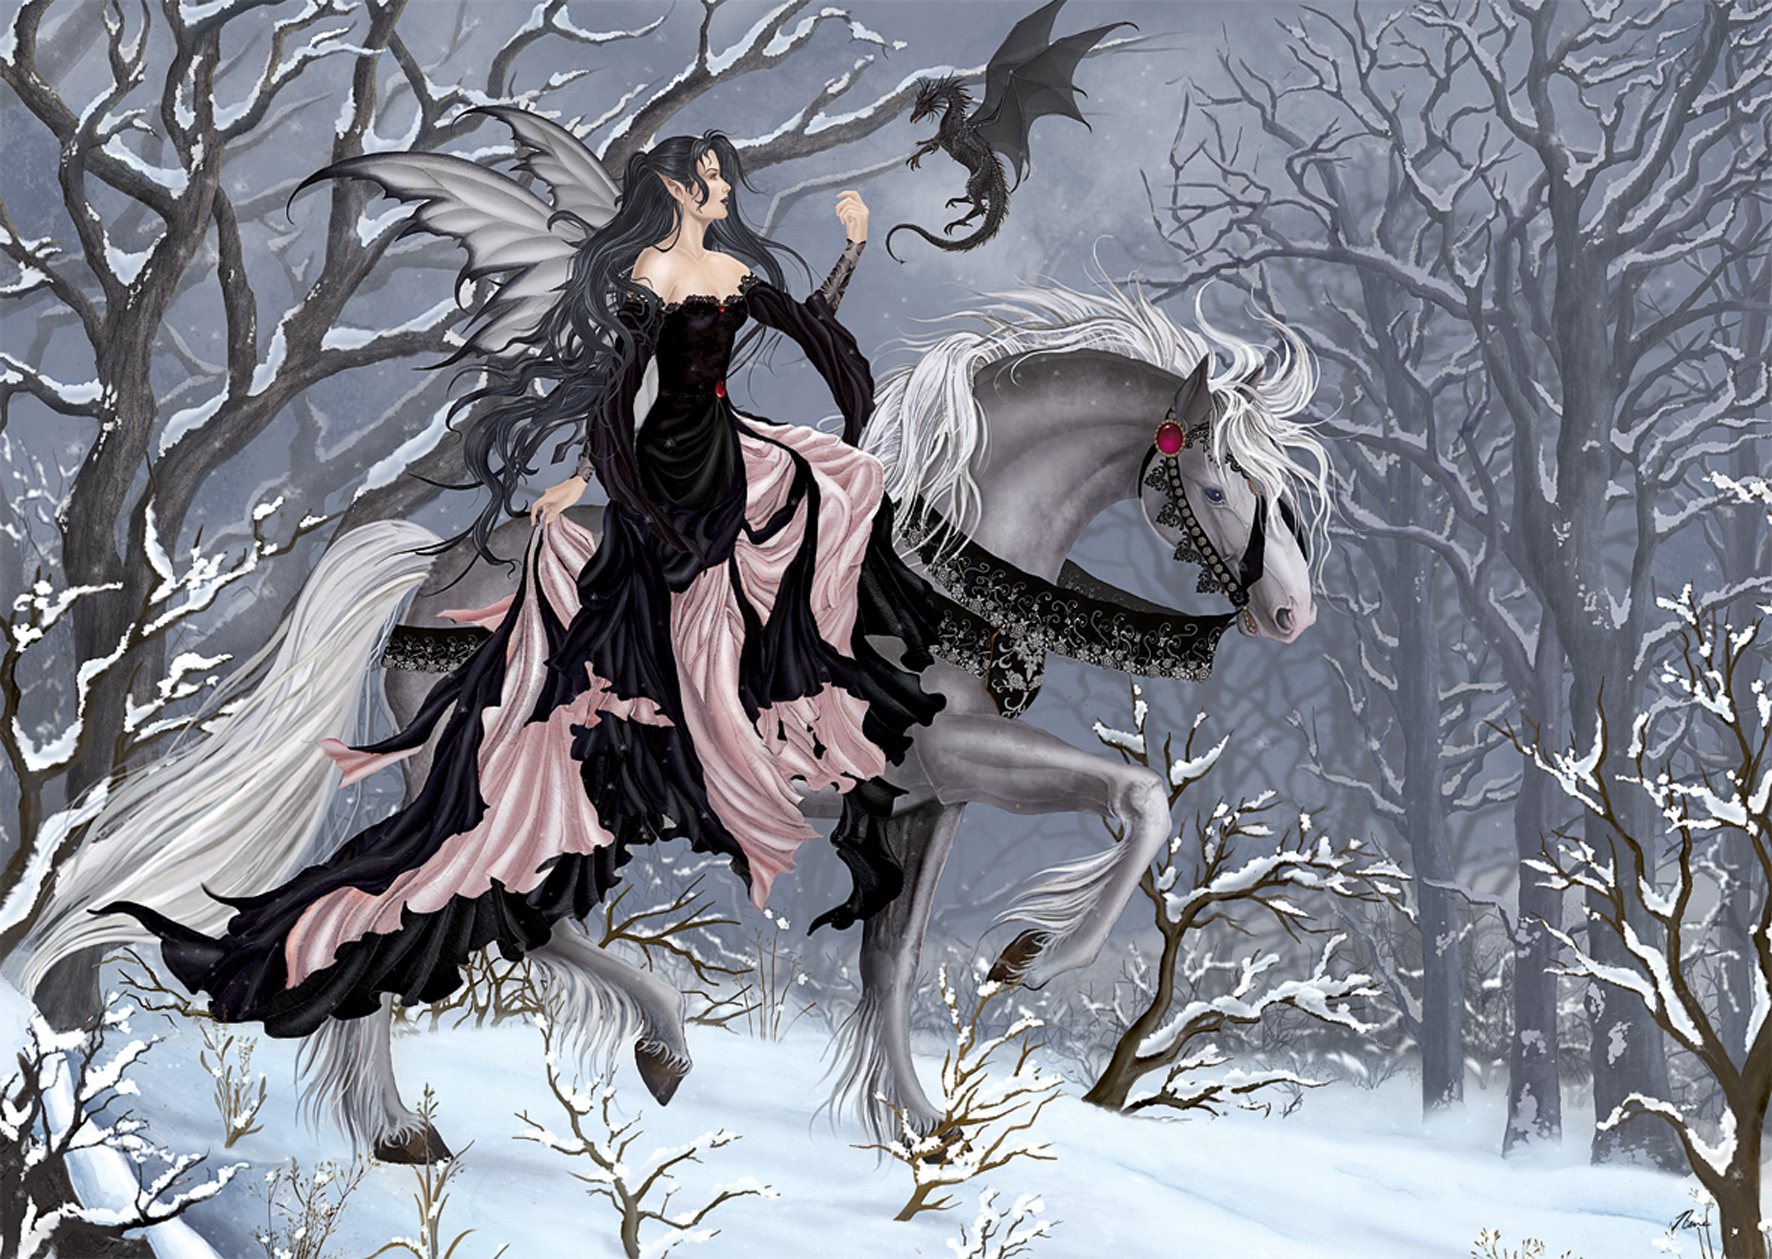 Fantasy fairy riding gracefully through a snowy landscape - Nene Thomas desktop wallpaper.